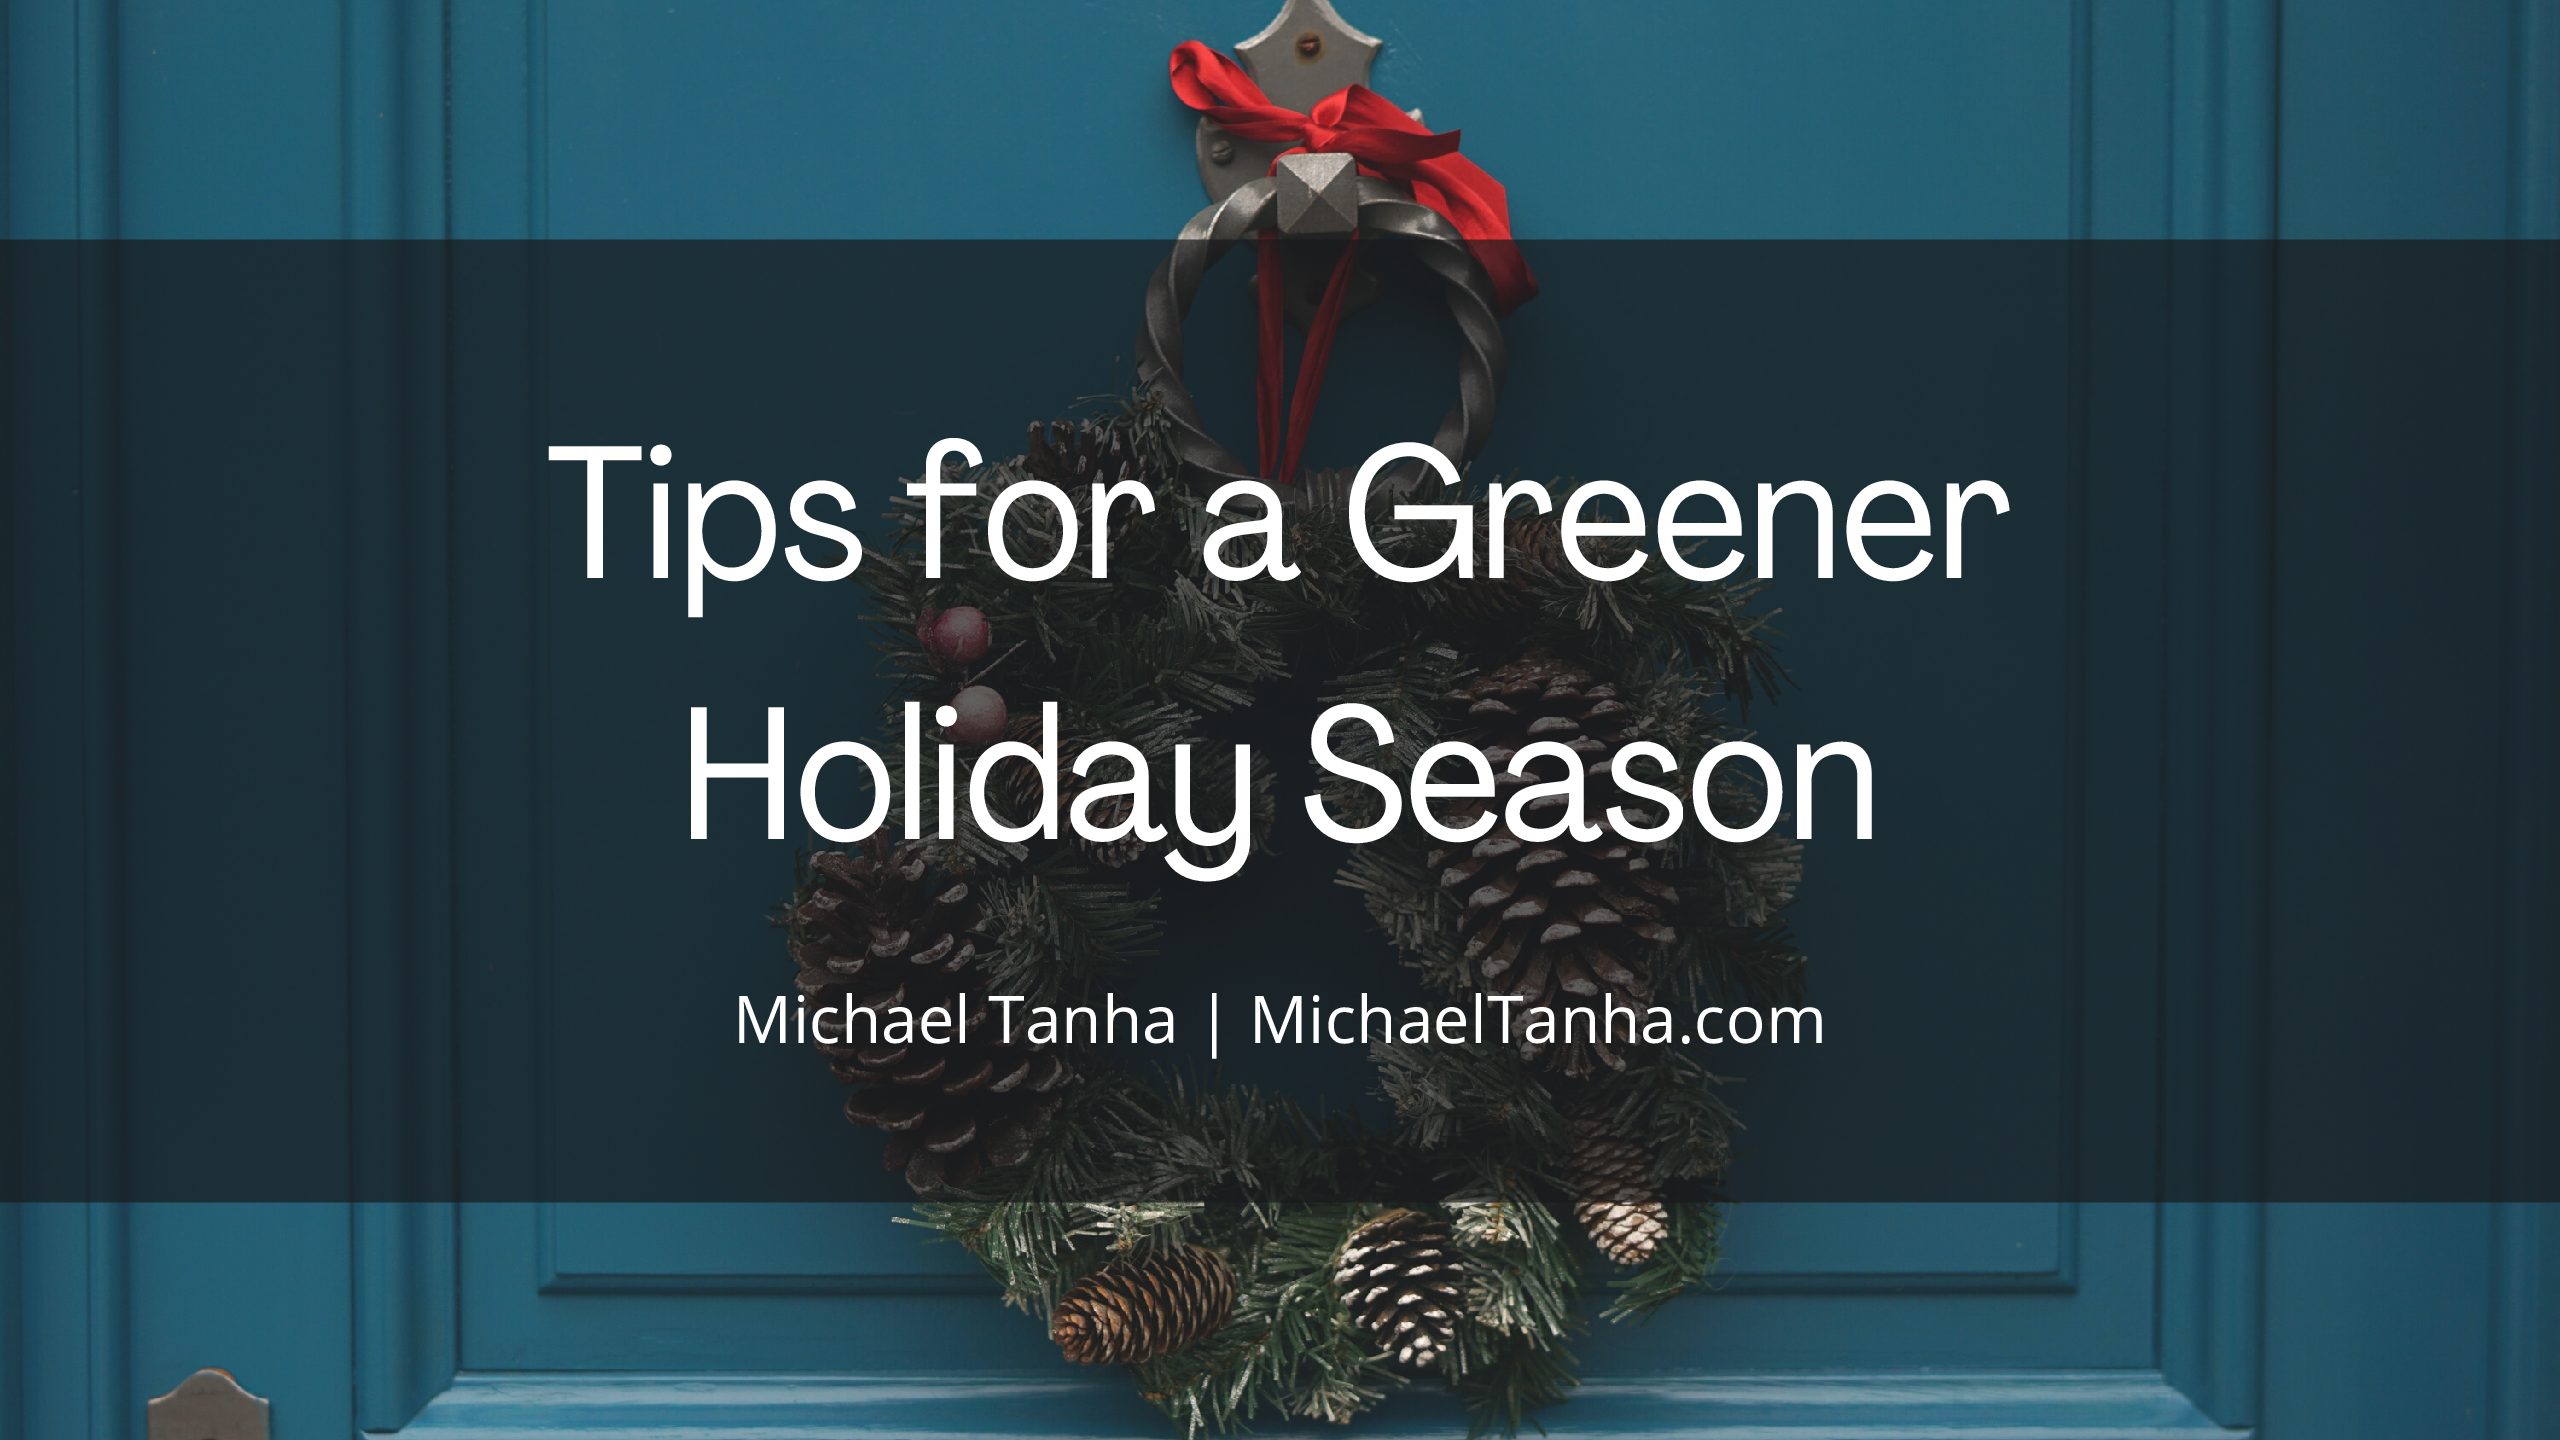 Tips for a Greener Holiday Season